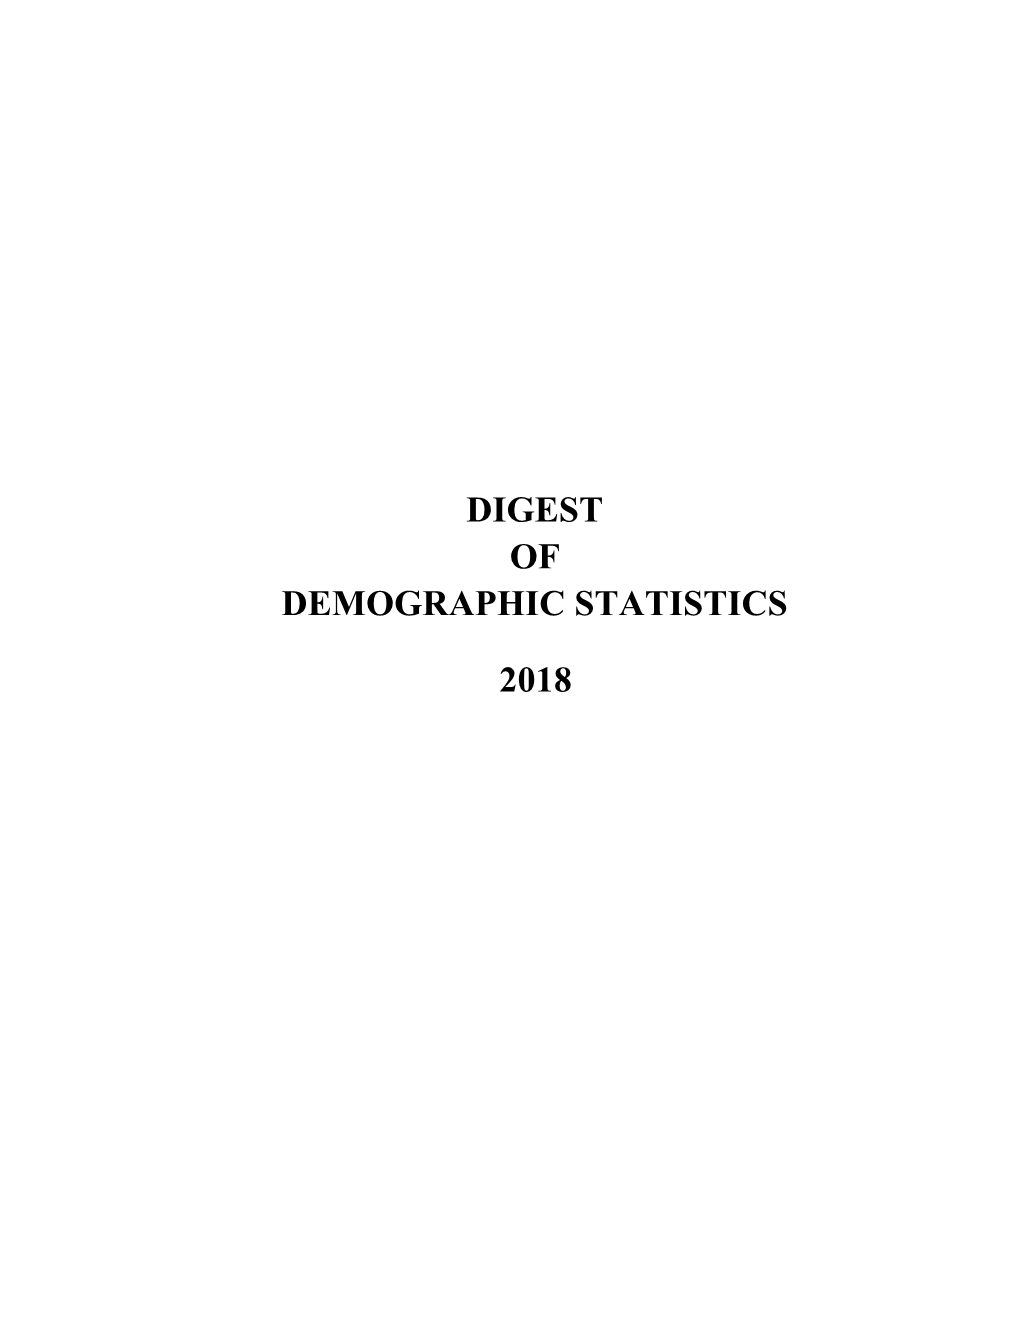 Digest of Demographic Statistics